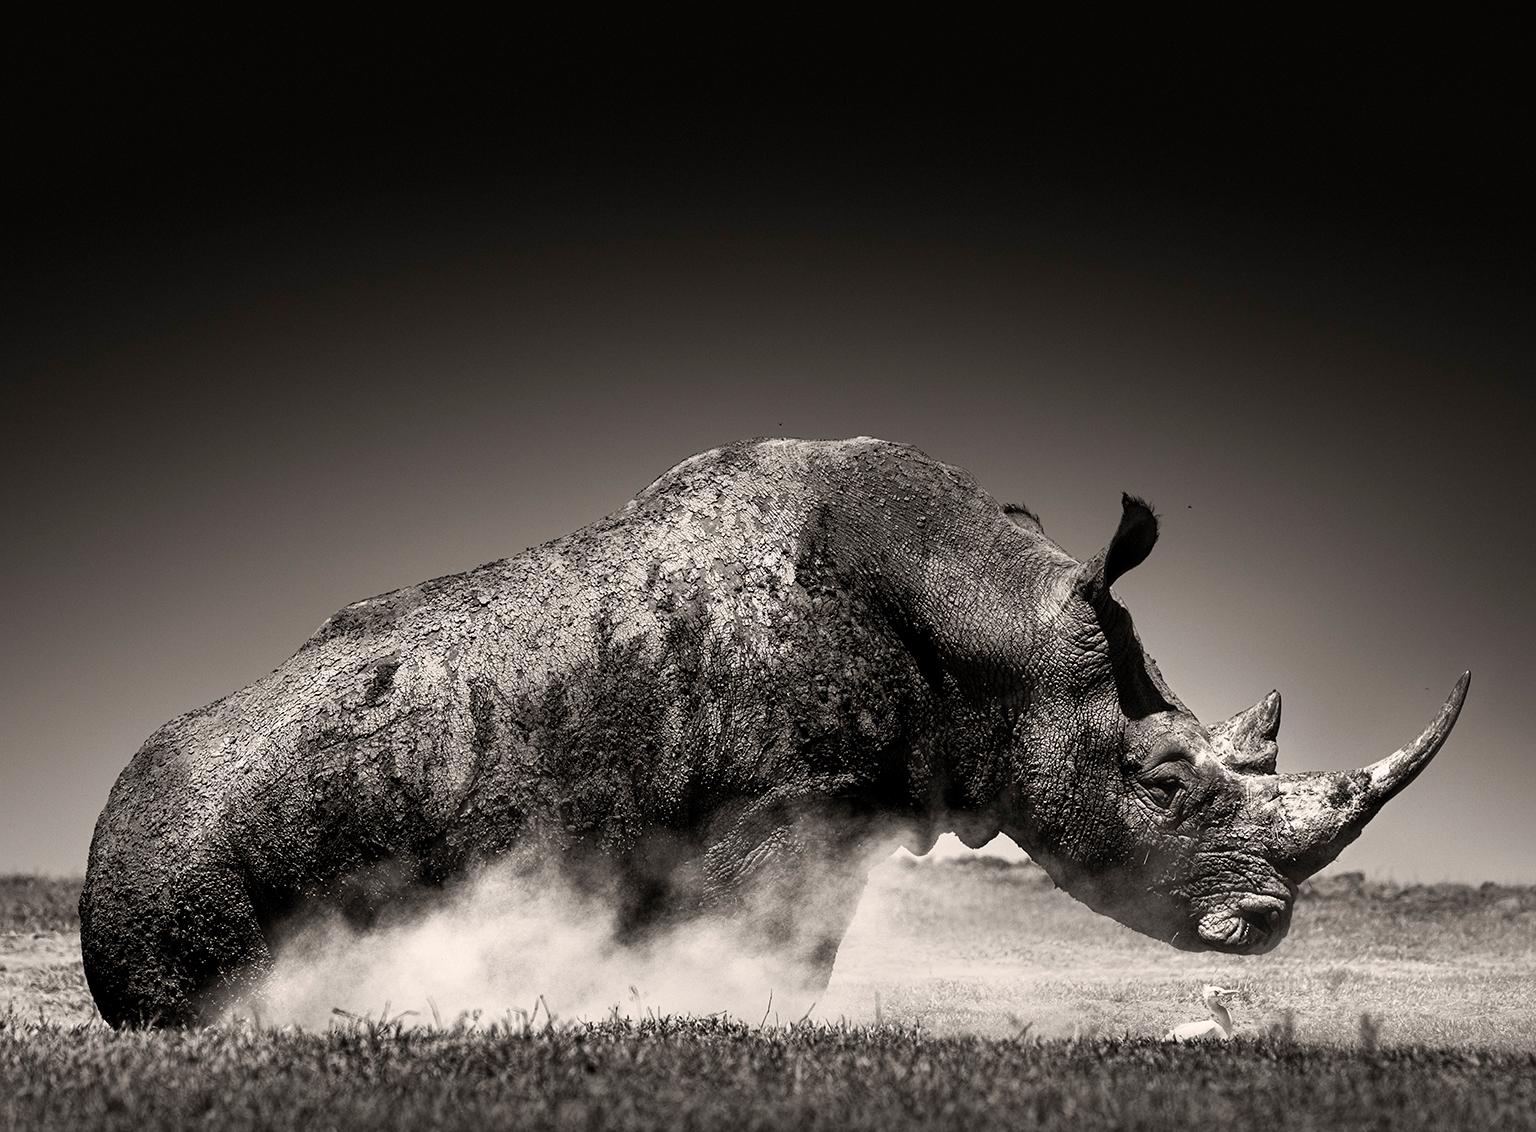 Joachim Schmeisser Landscape Photograph - Rise I, animal, wildlife, black and white photography, rhino, africa